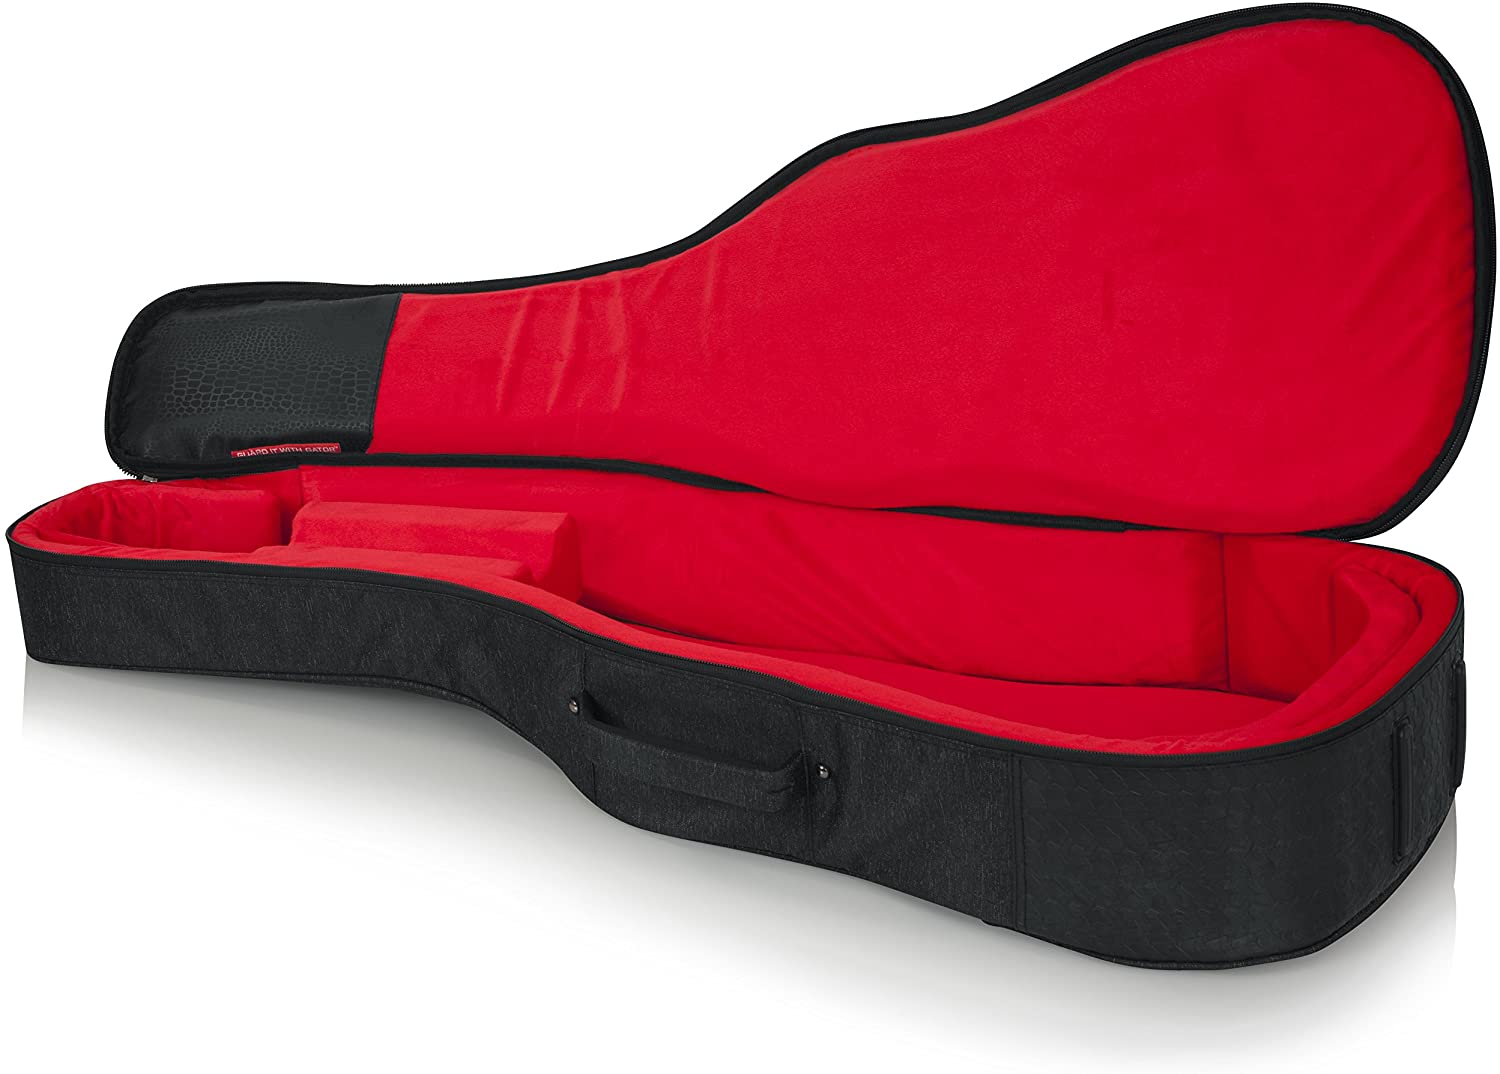 Gator Cases Transit Series Acoustic Guitar Gig Bag - Charcoal Black - Pro-Distributing